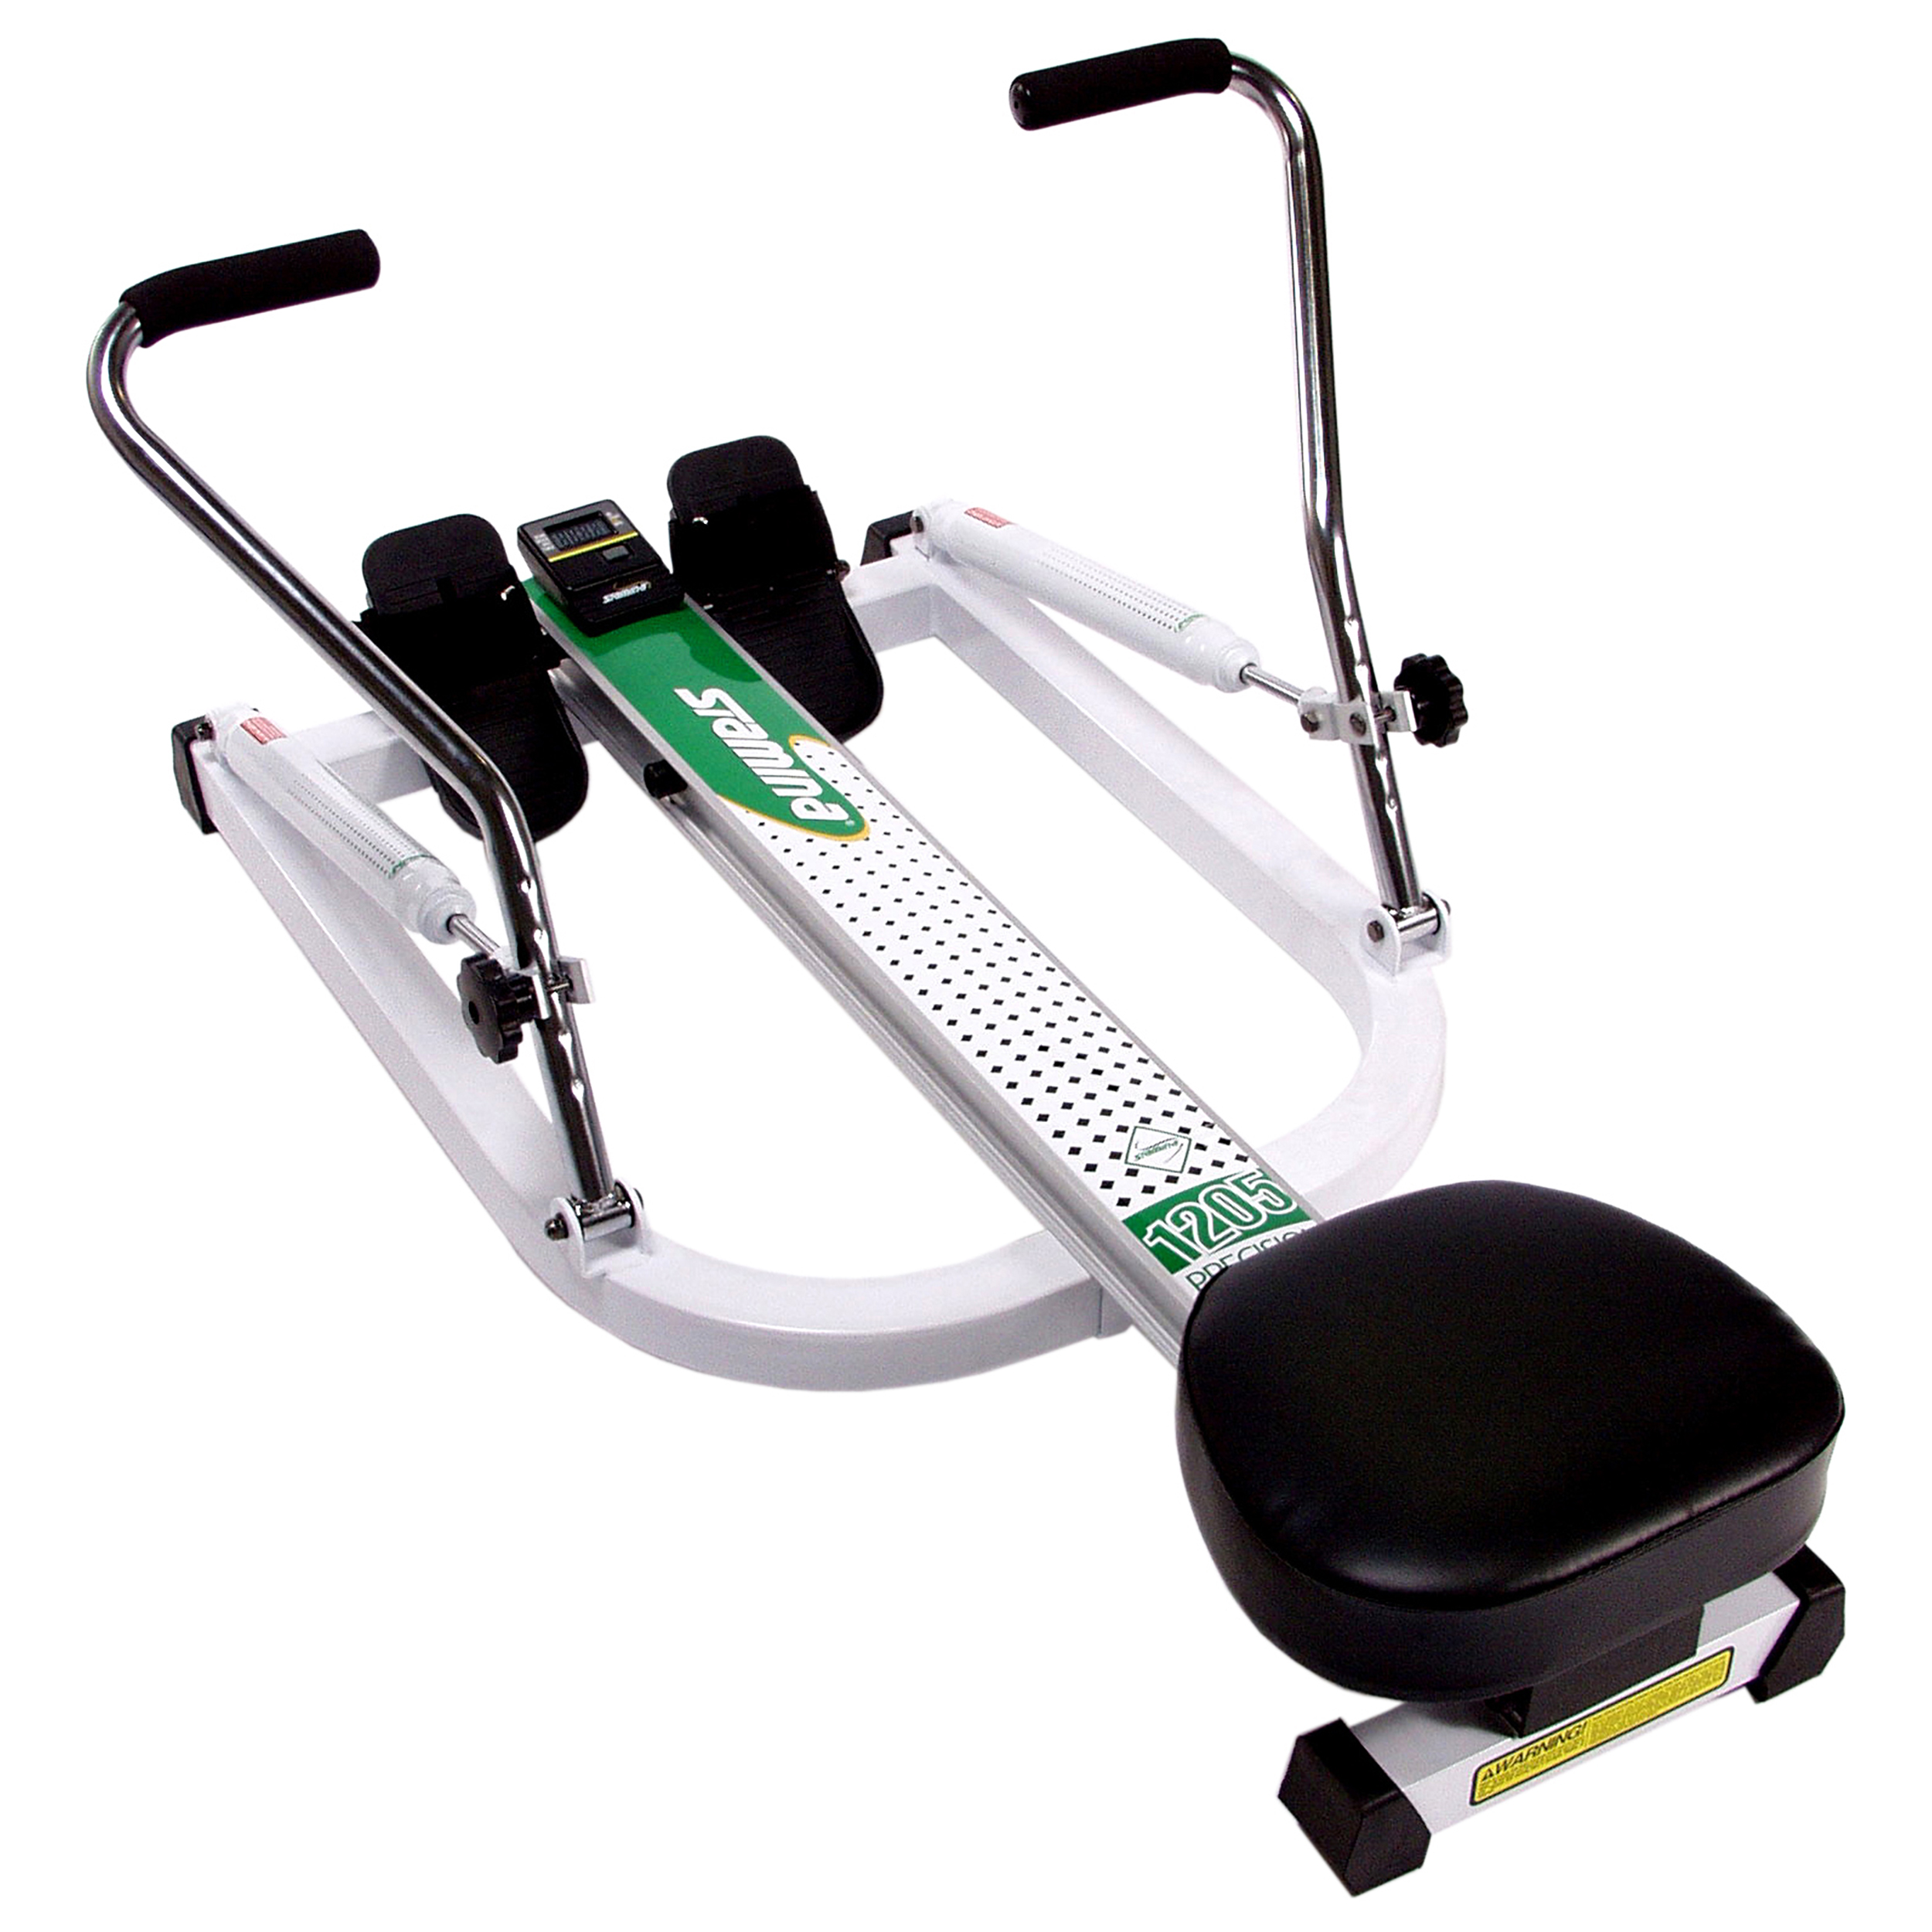 Stamina 1205 Precision Rower home gym exercise equipment